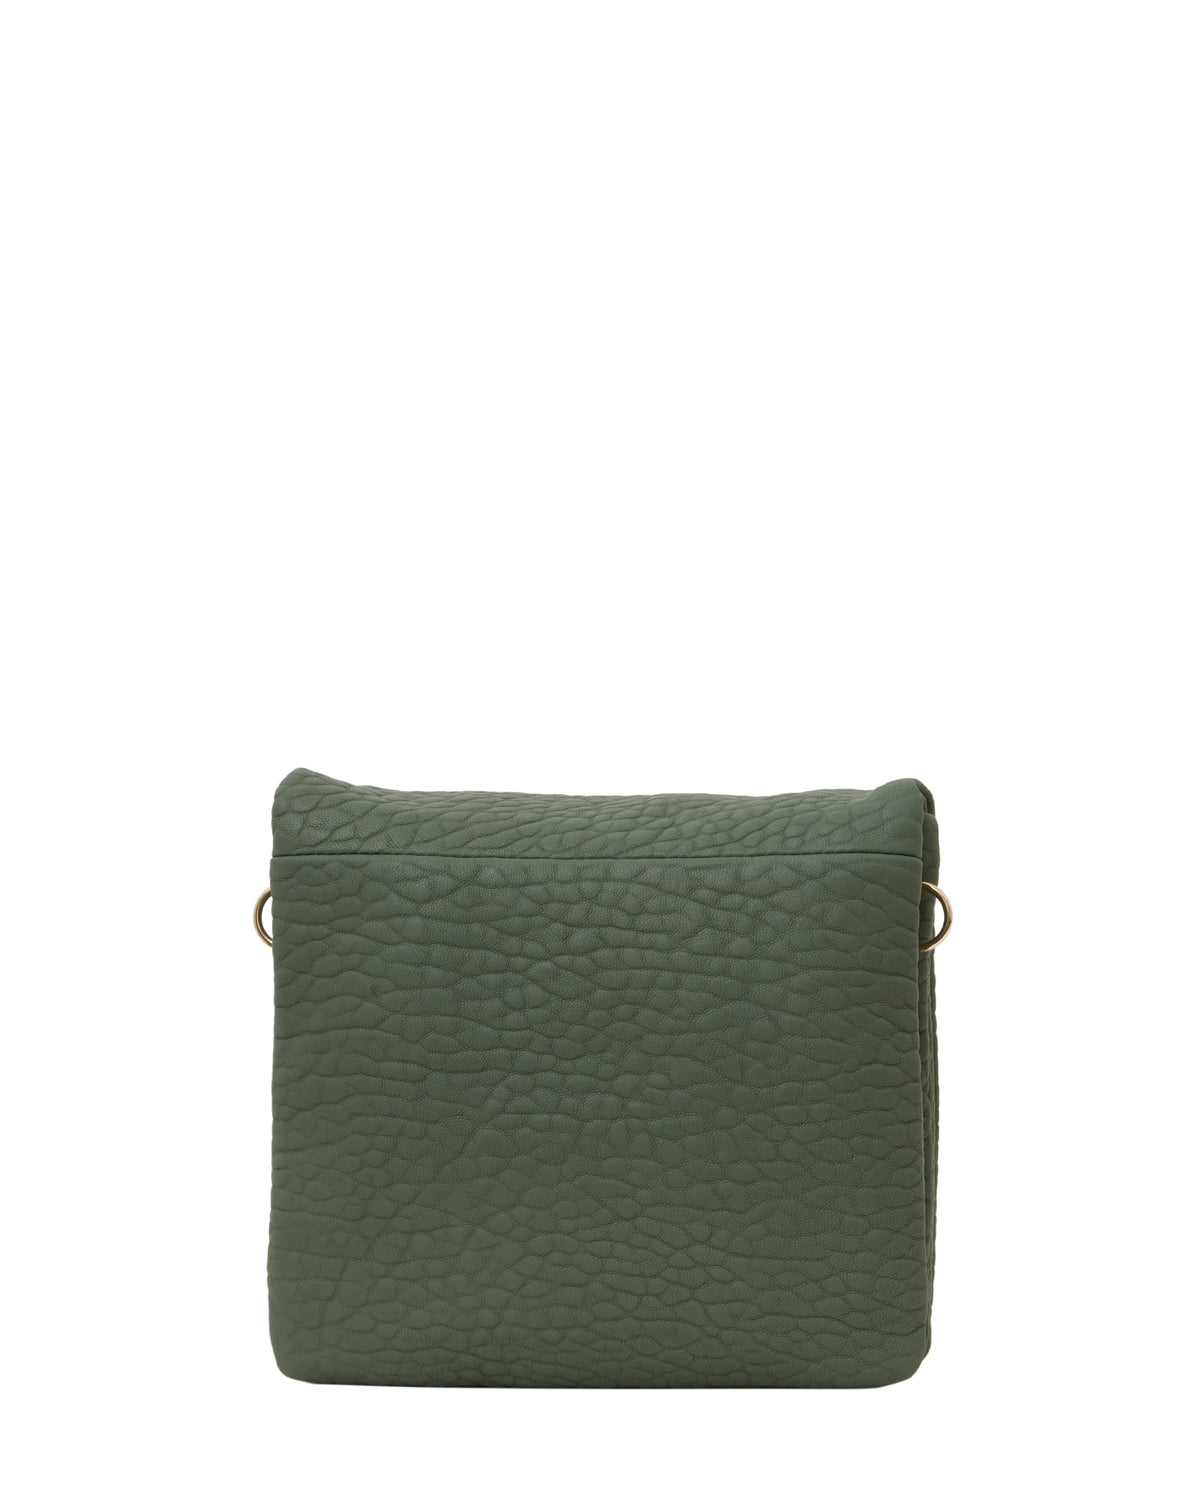 Buy Minicci Women's Glitter Fox Crossbody Bag at Amazon.in